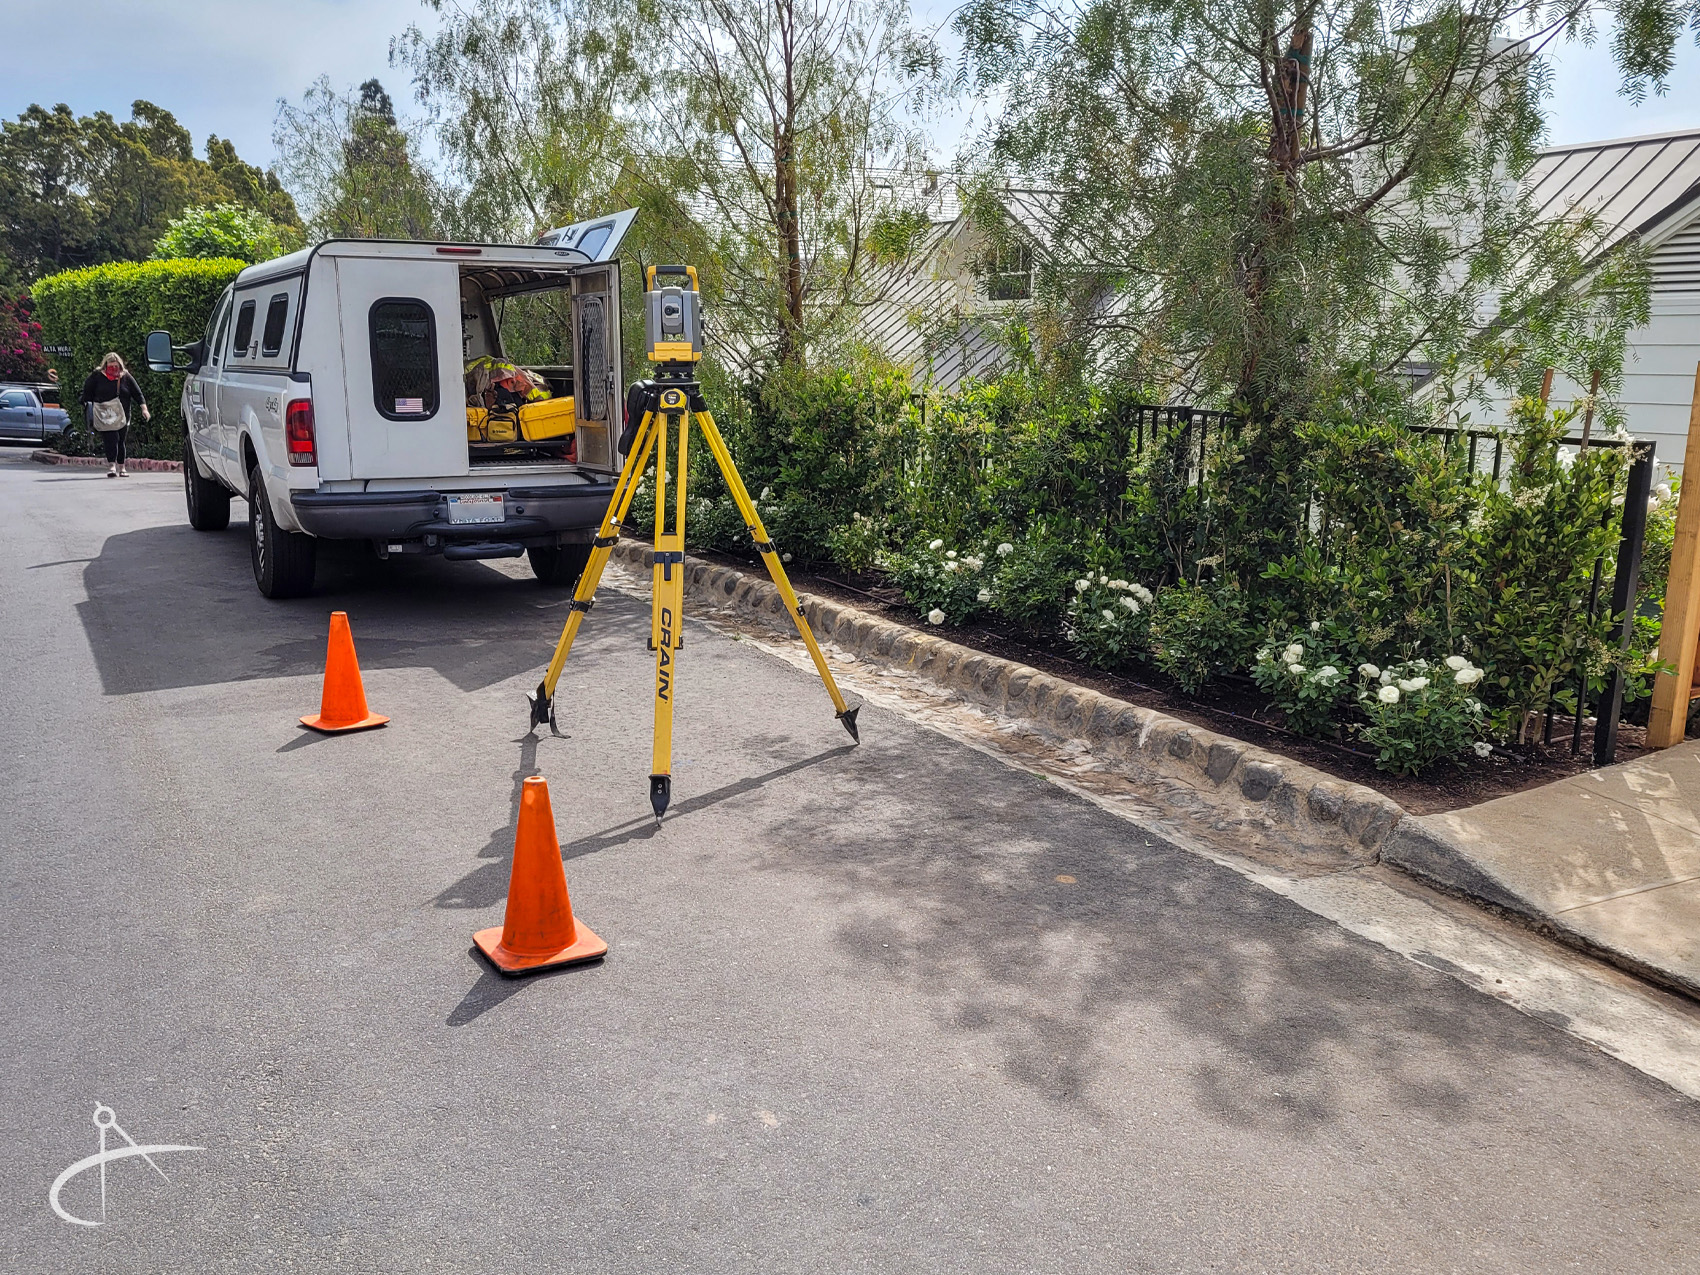 Total station surveying instrument setup next to work truck.